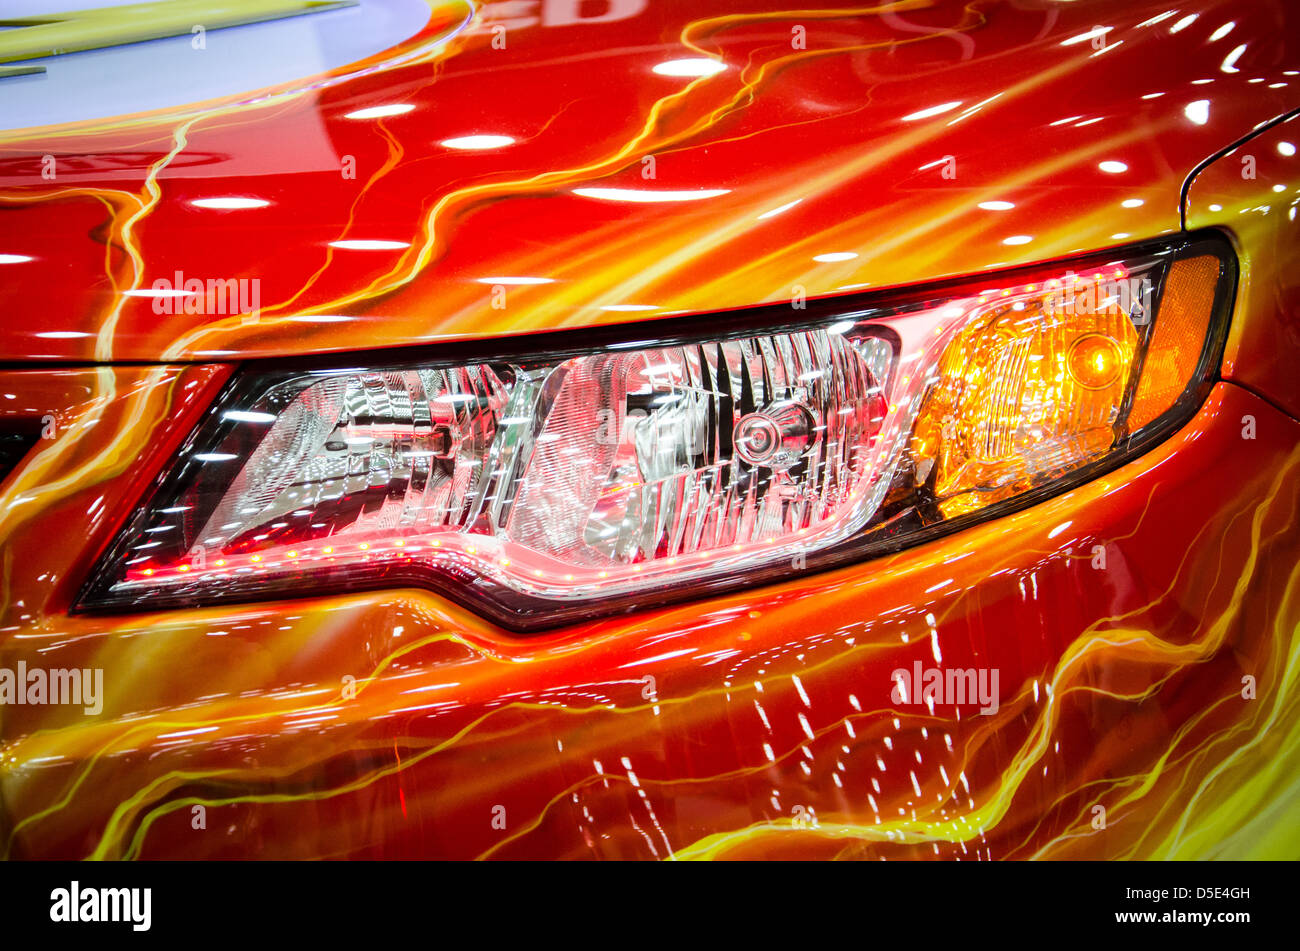 Kia Flame at Baltimore Car Show Stock Photo